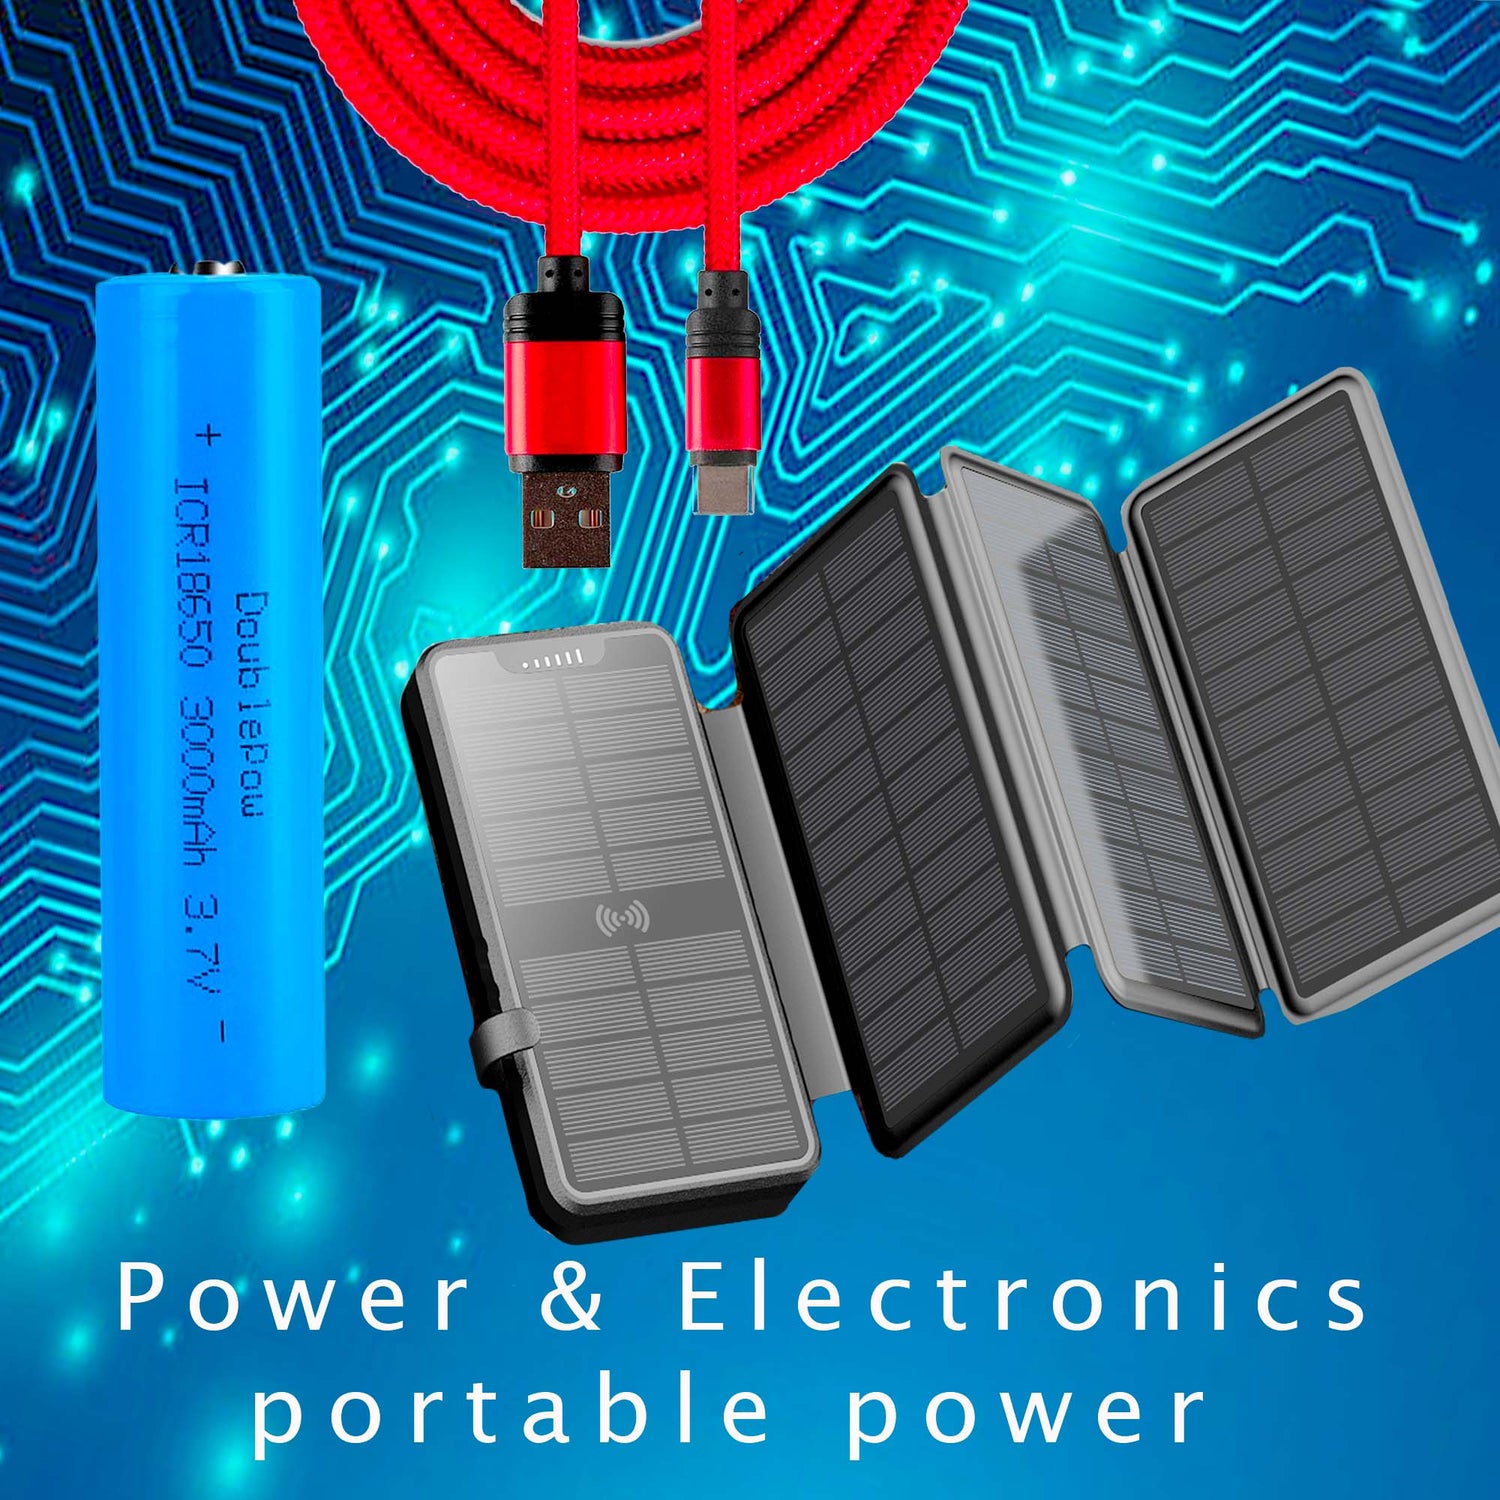 Power & Electronics